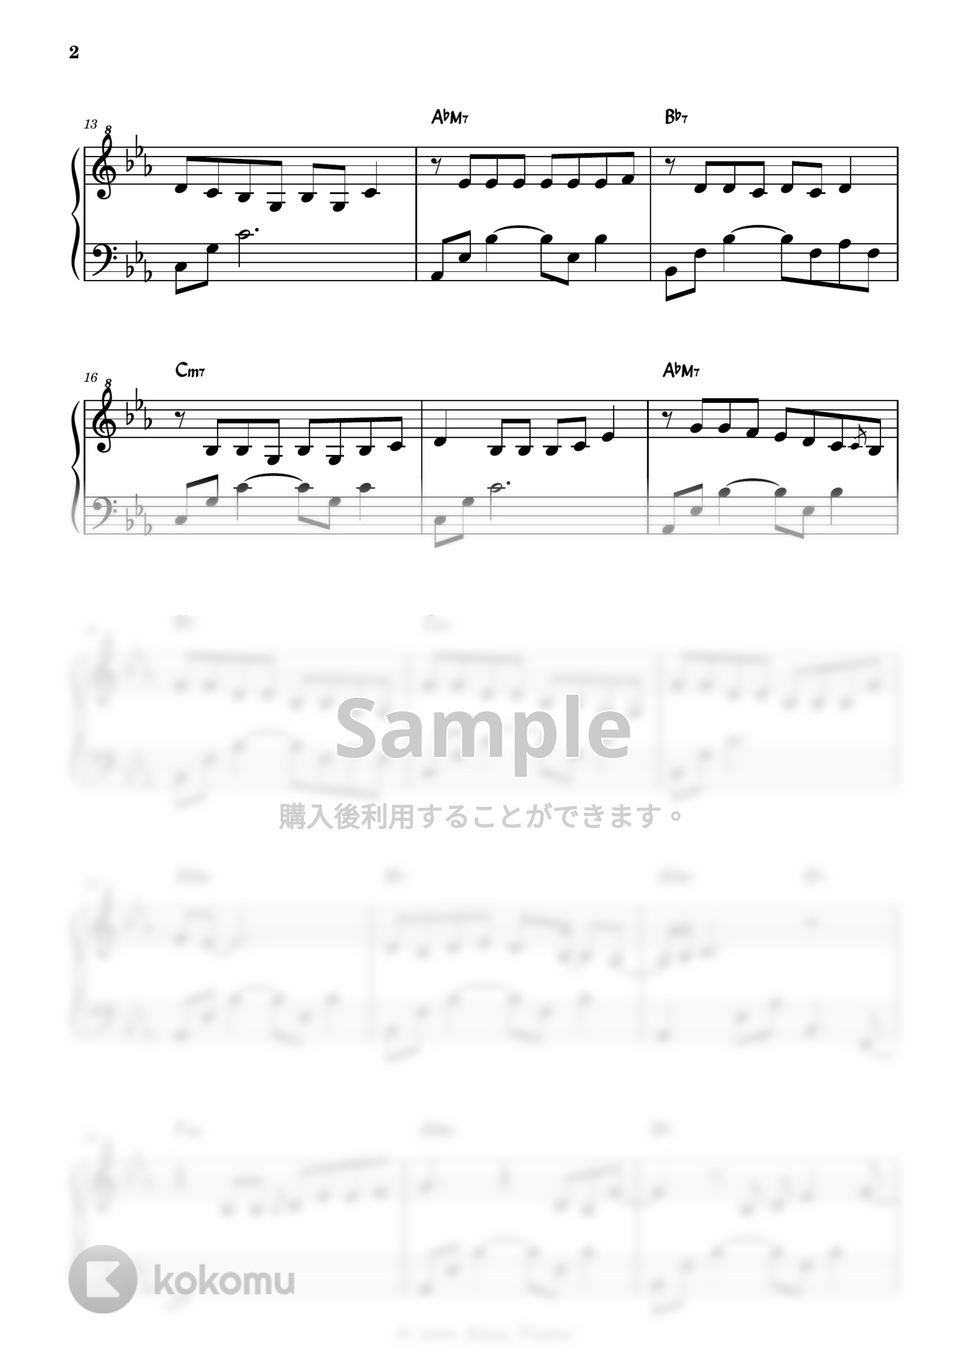 Ne-Yo - Because Of You (中級ピアノソロ) by A-sam